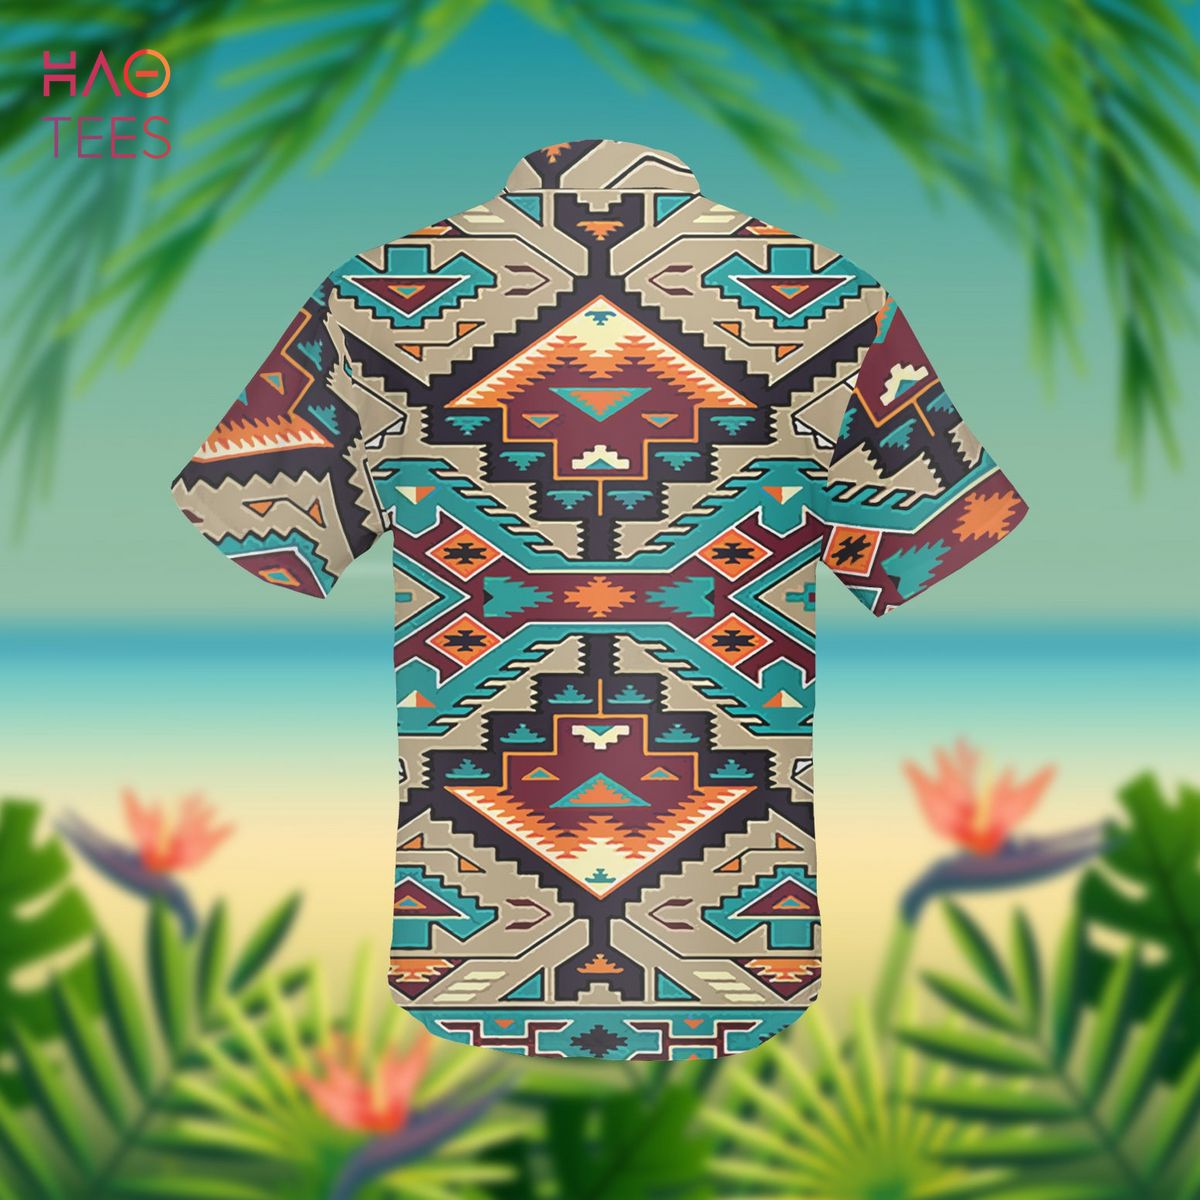 Native American Culture Design Hawaiian Shirt Limited